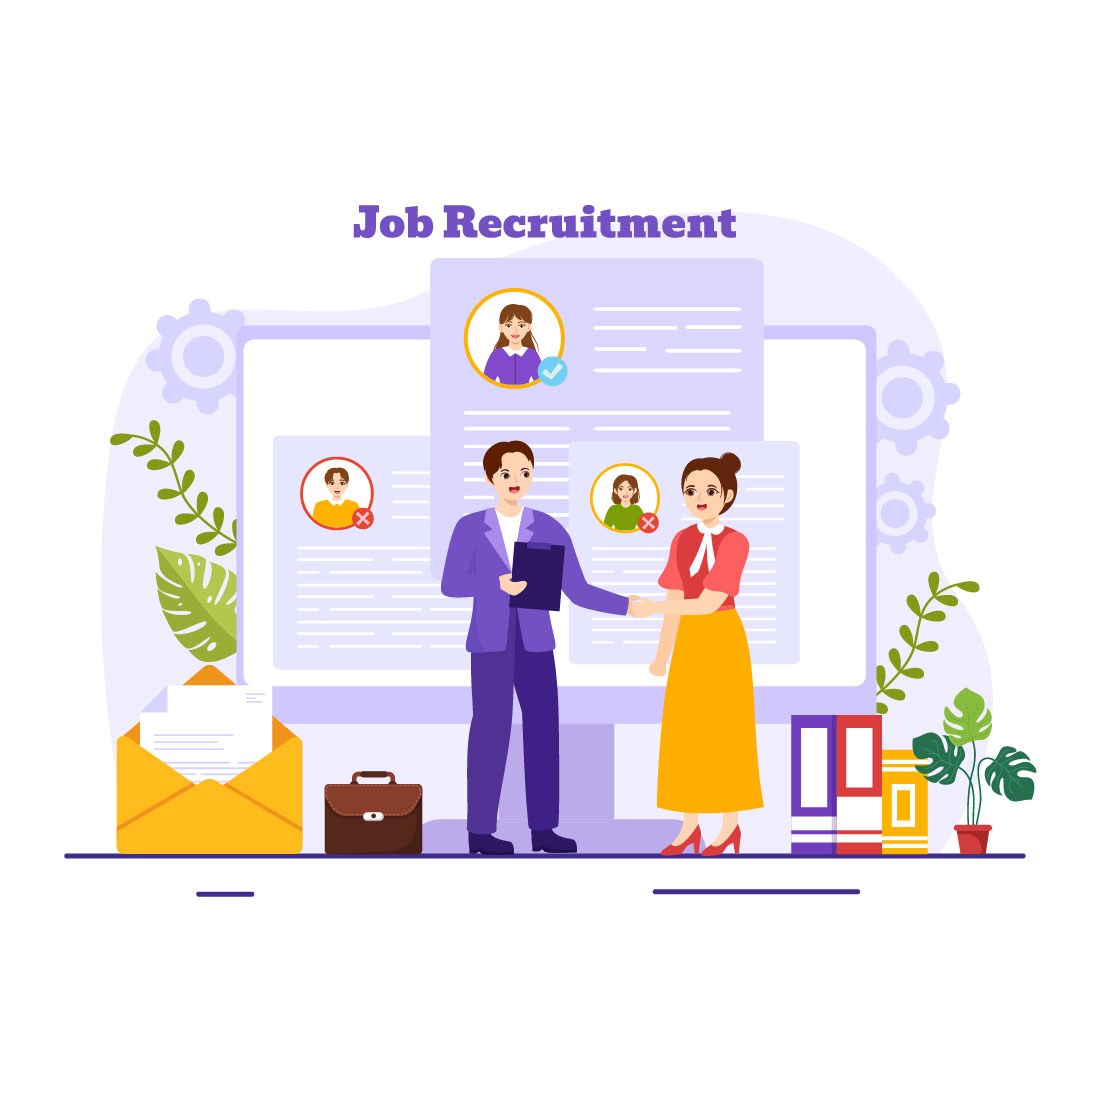 12 Job Recruitment Illustration cover image.